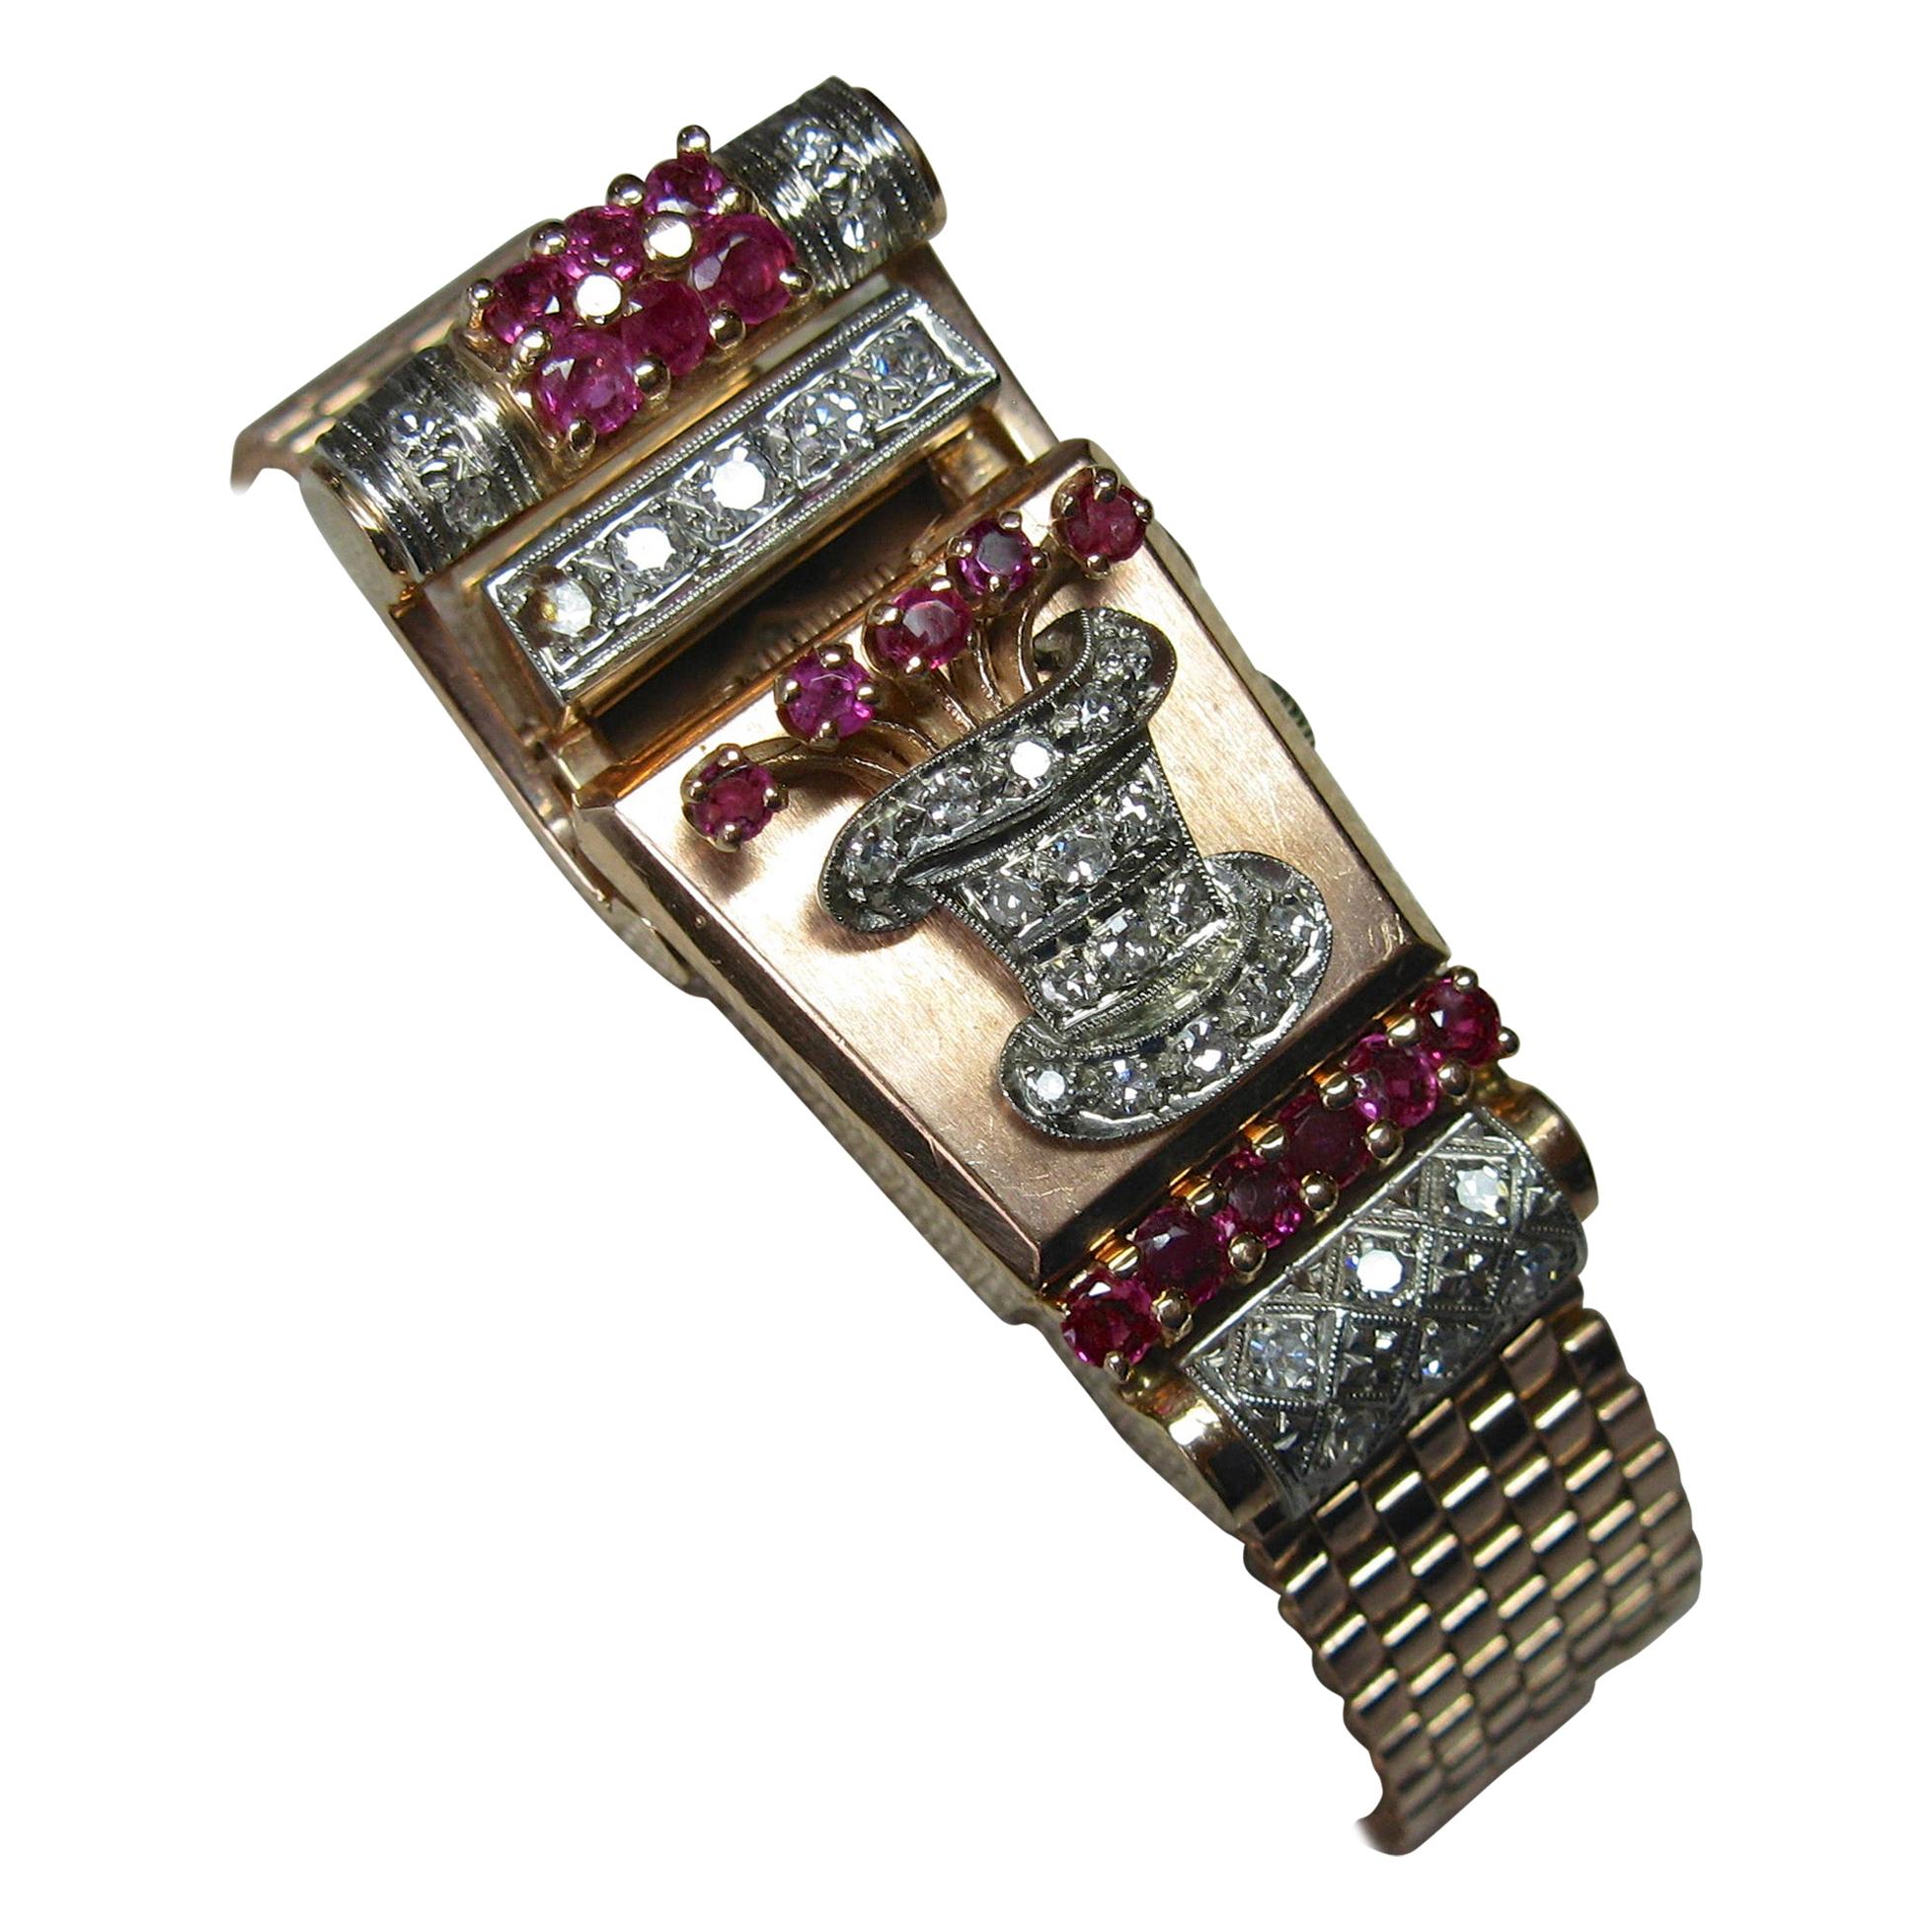 Art Deco Retro Top Hat Diamond Ruby Wittnauer Wristwatch Bracelet 14 Karat Gold